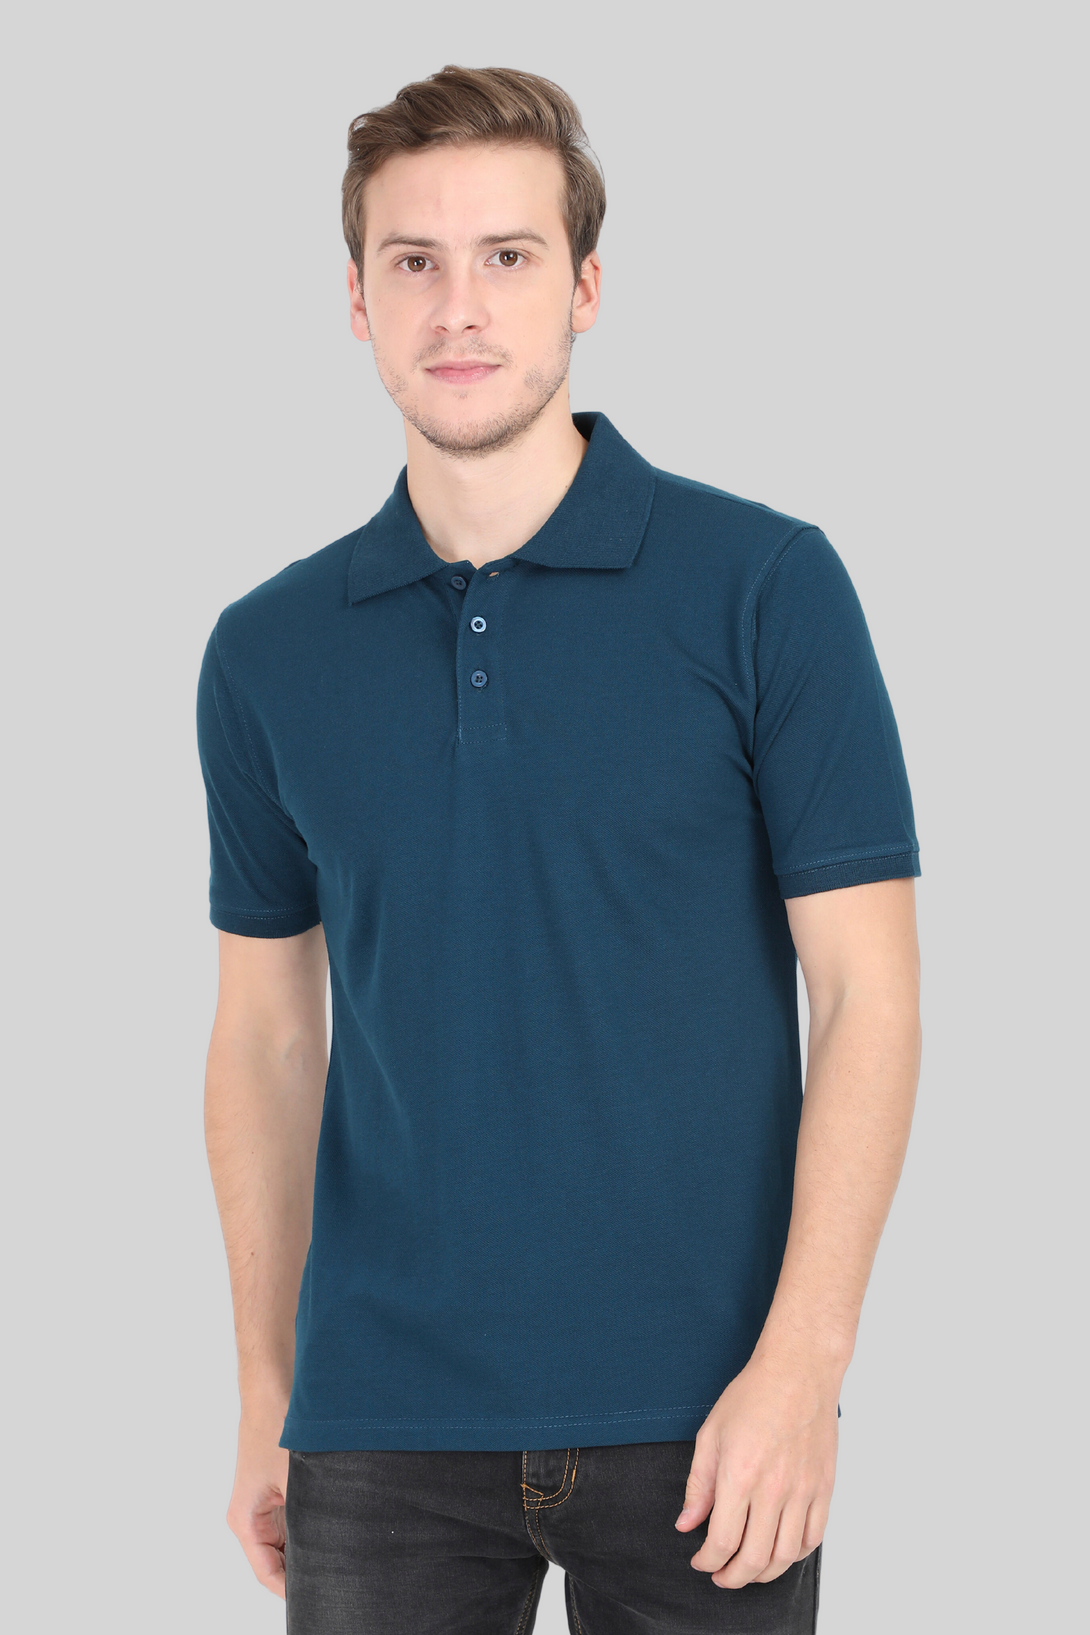 Petrol Blue Polo T-Shirt For Men - WowWaves - 1